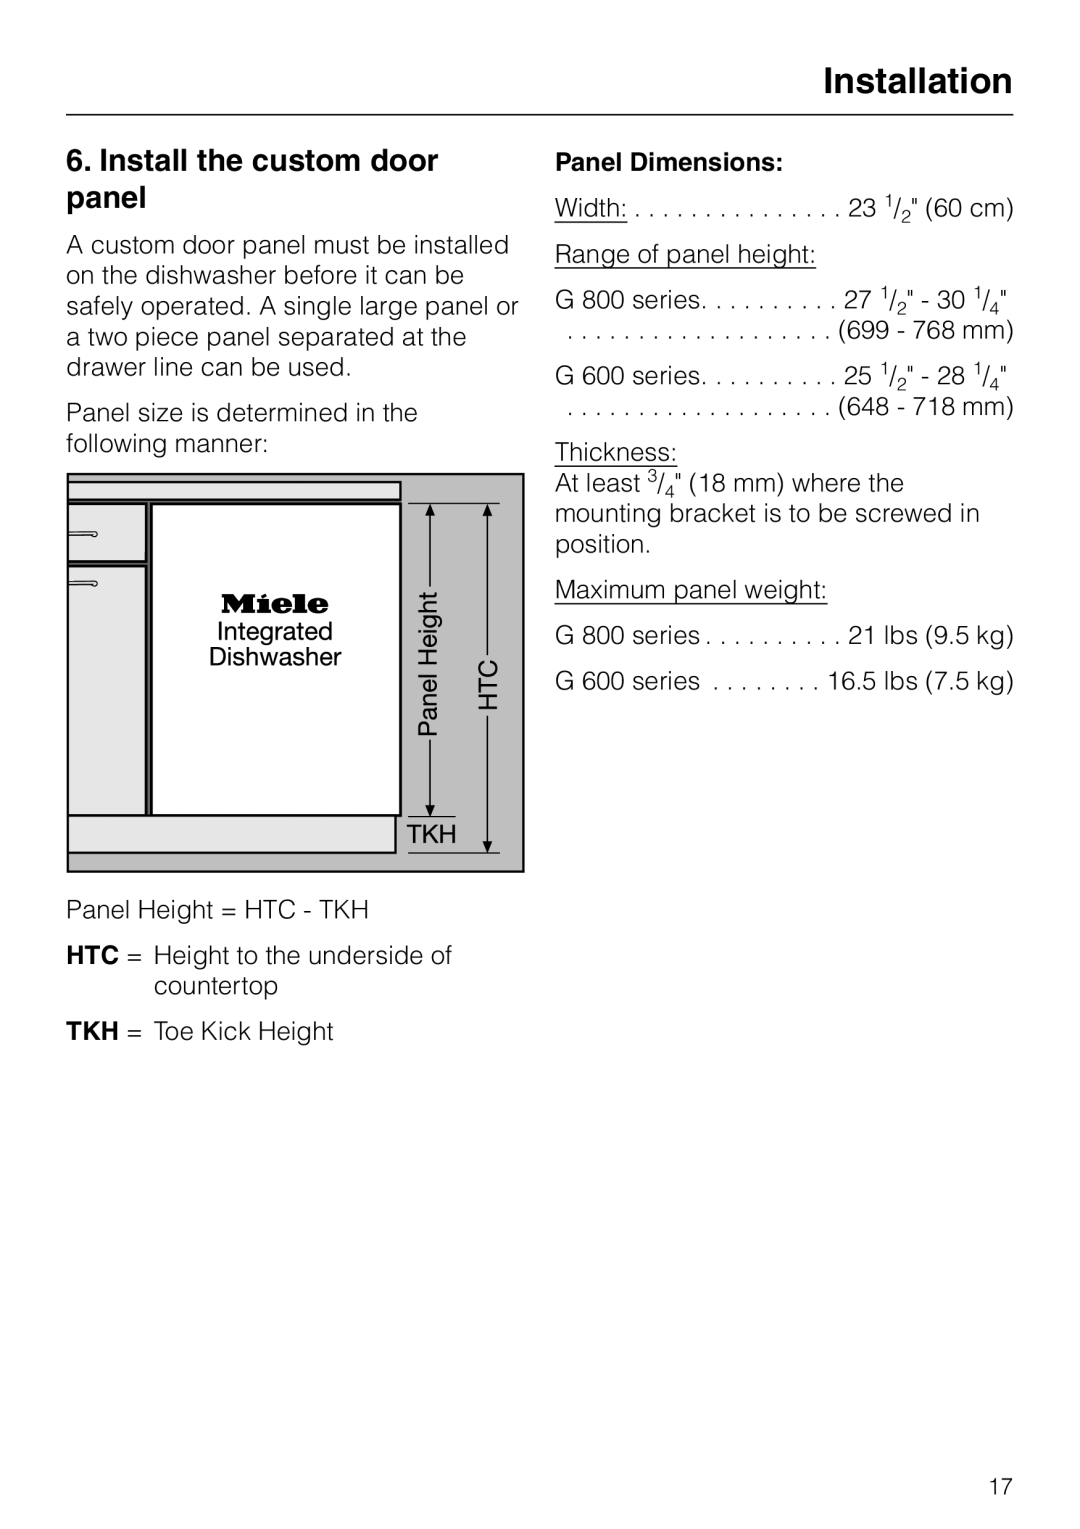 Miele HG01 installation instructions Install the custom door panel, Panel Dimensions, Installation 